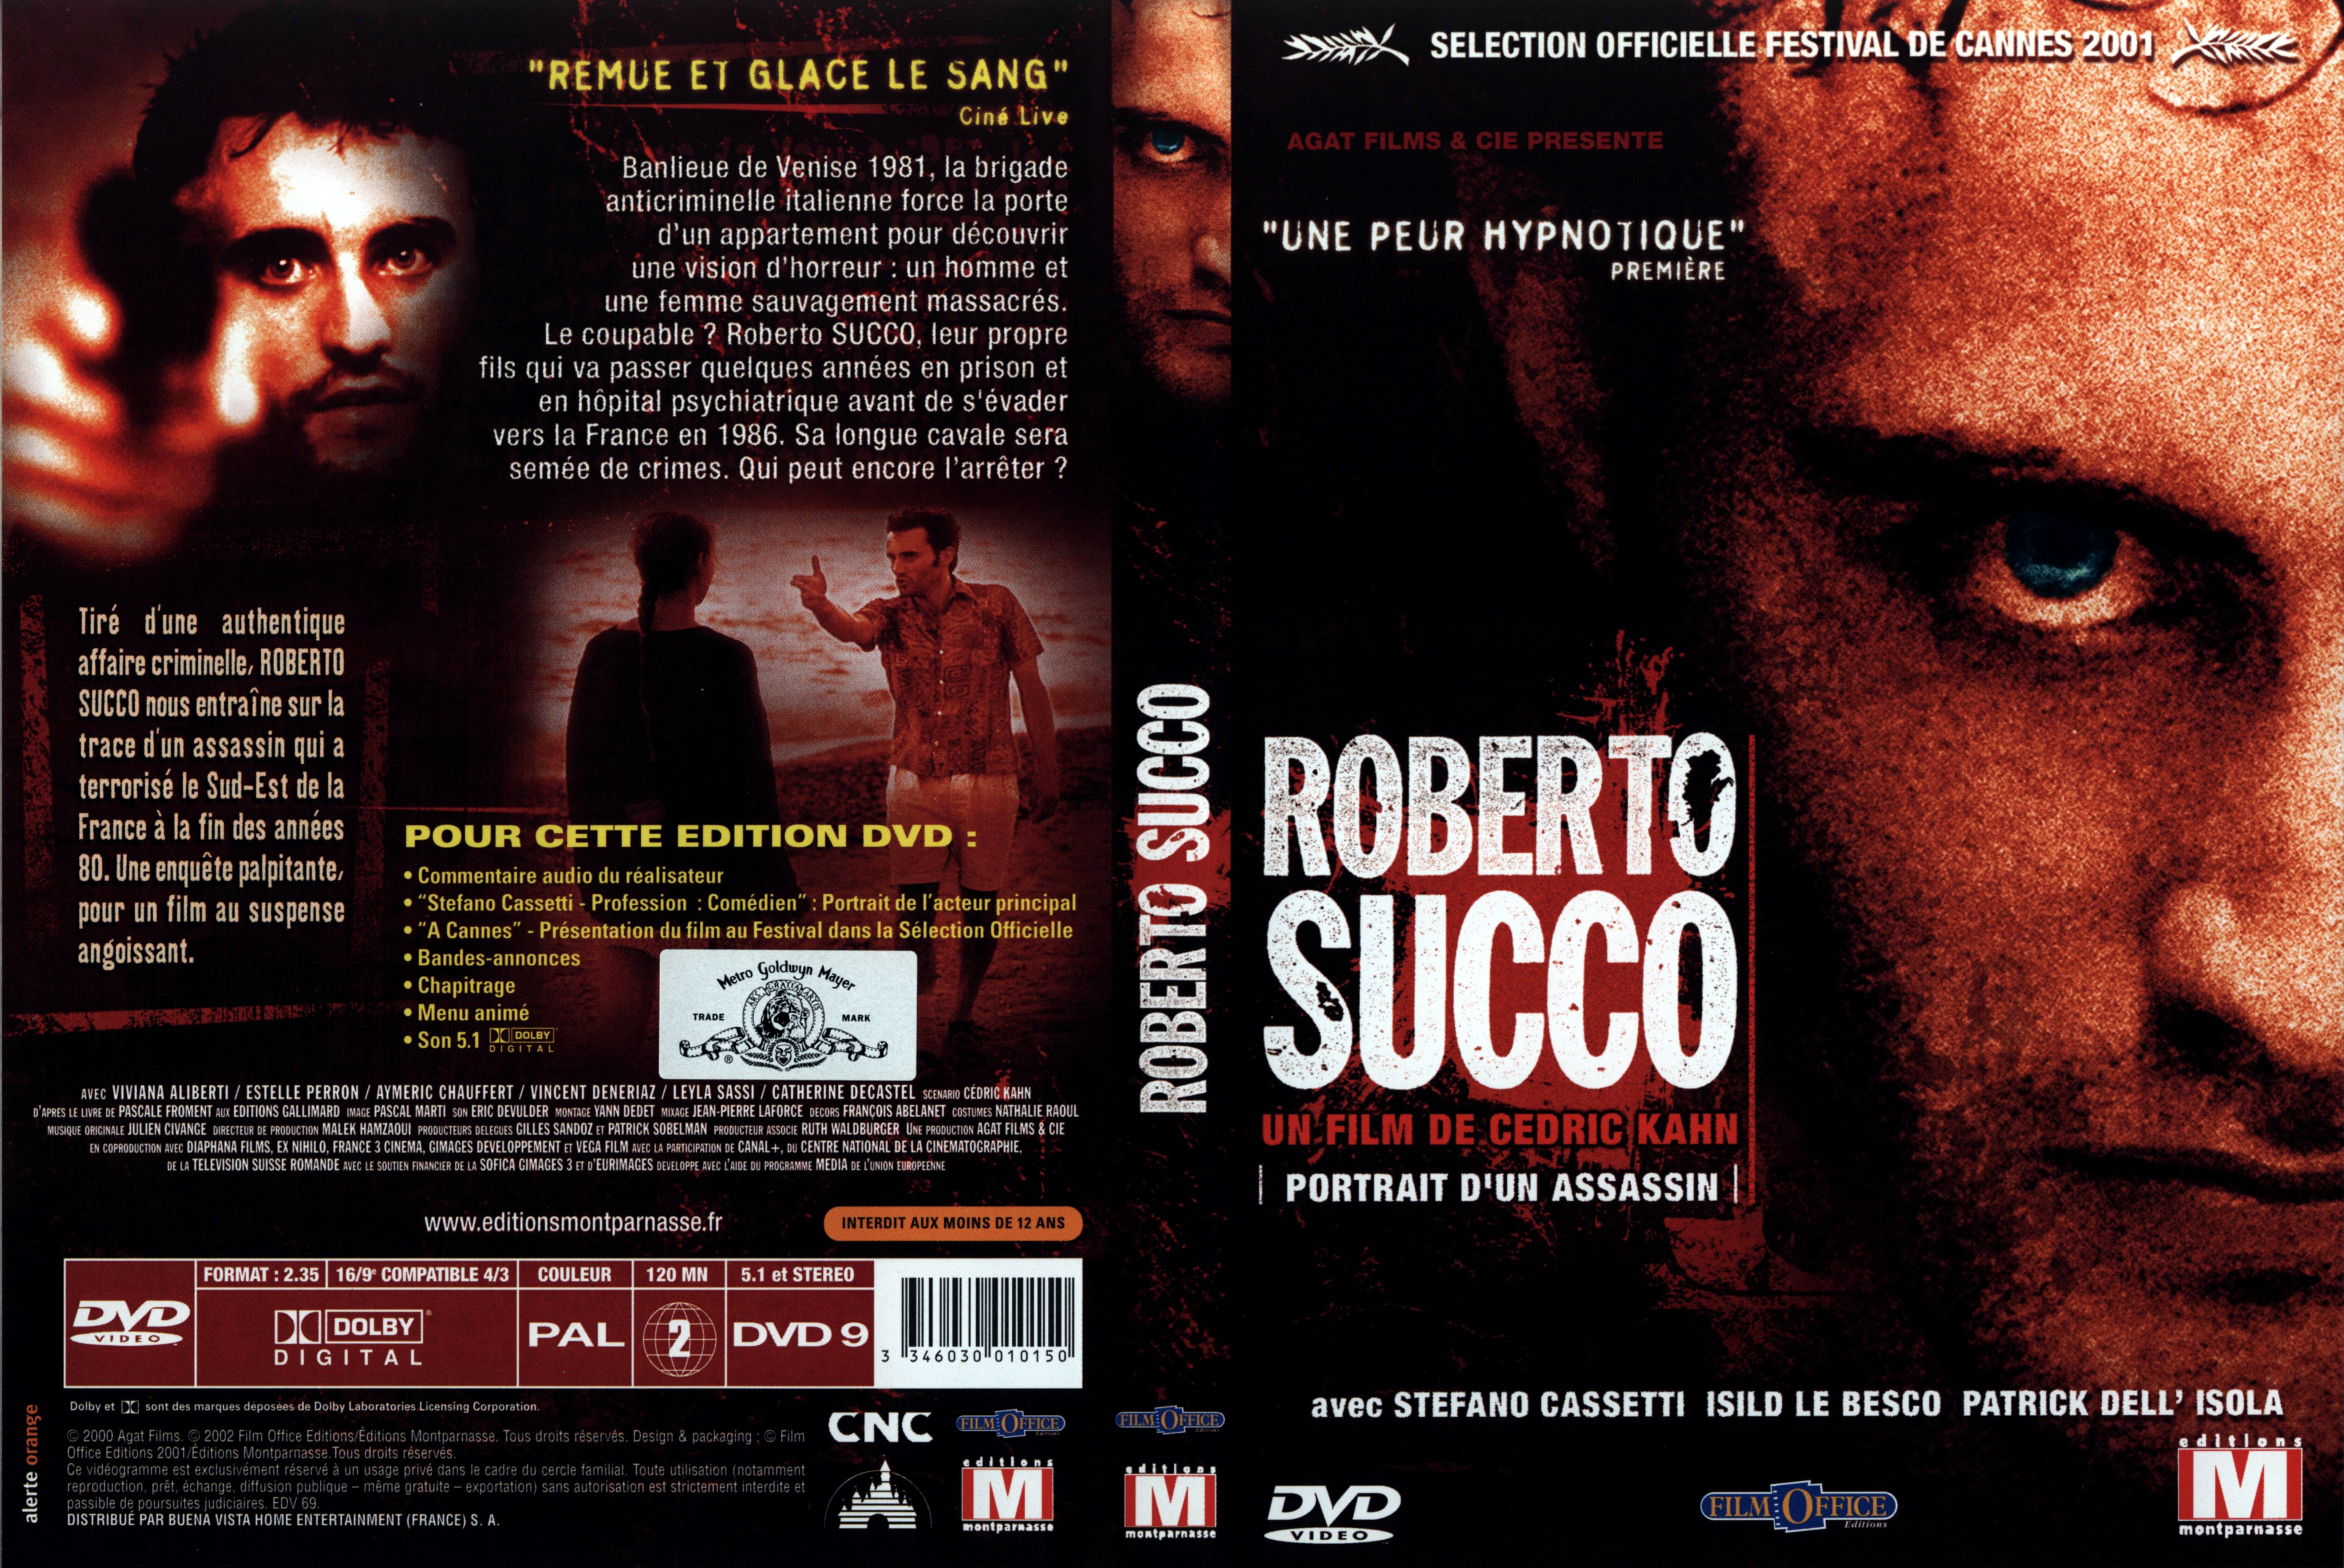 Jaquette DVD Roberto Succo v2